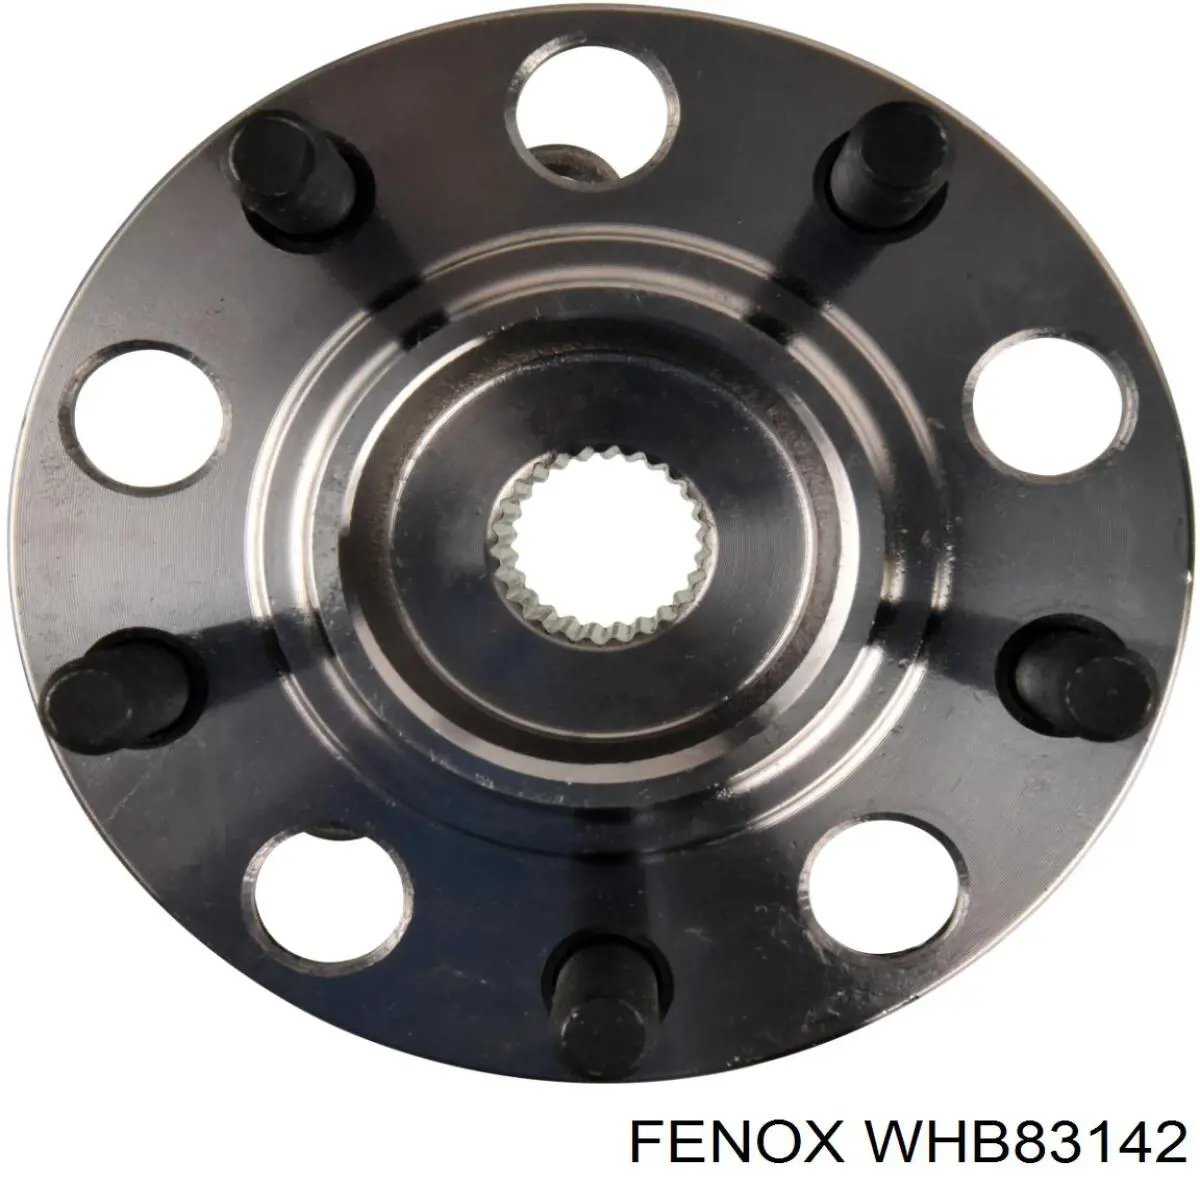 WHB83142 Fenox ступица задняя